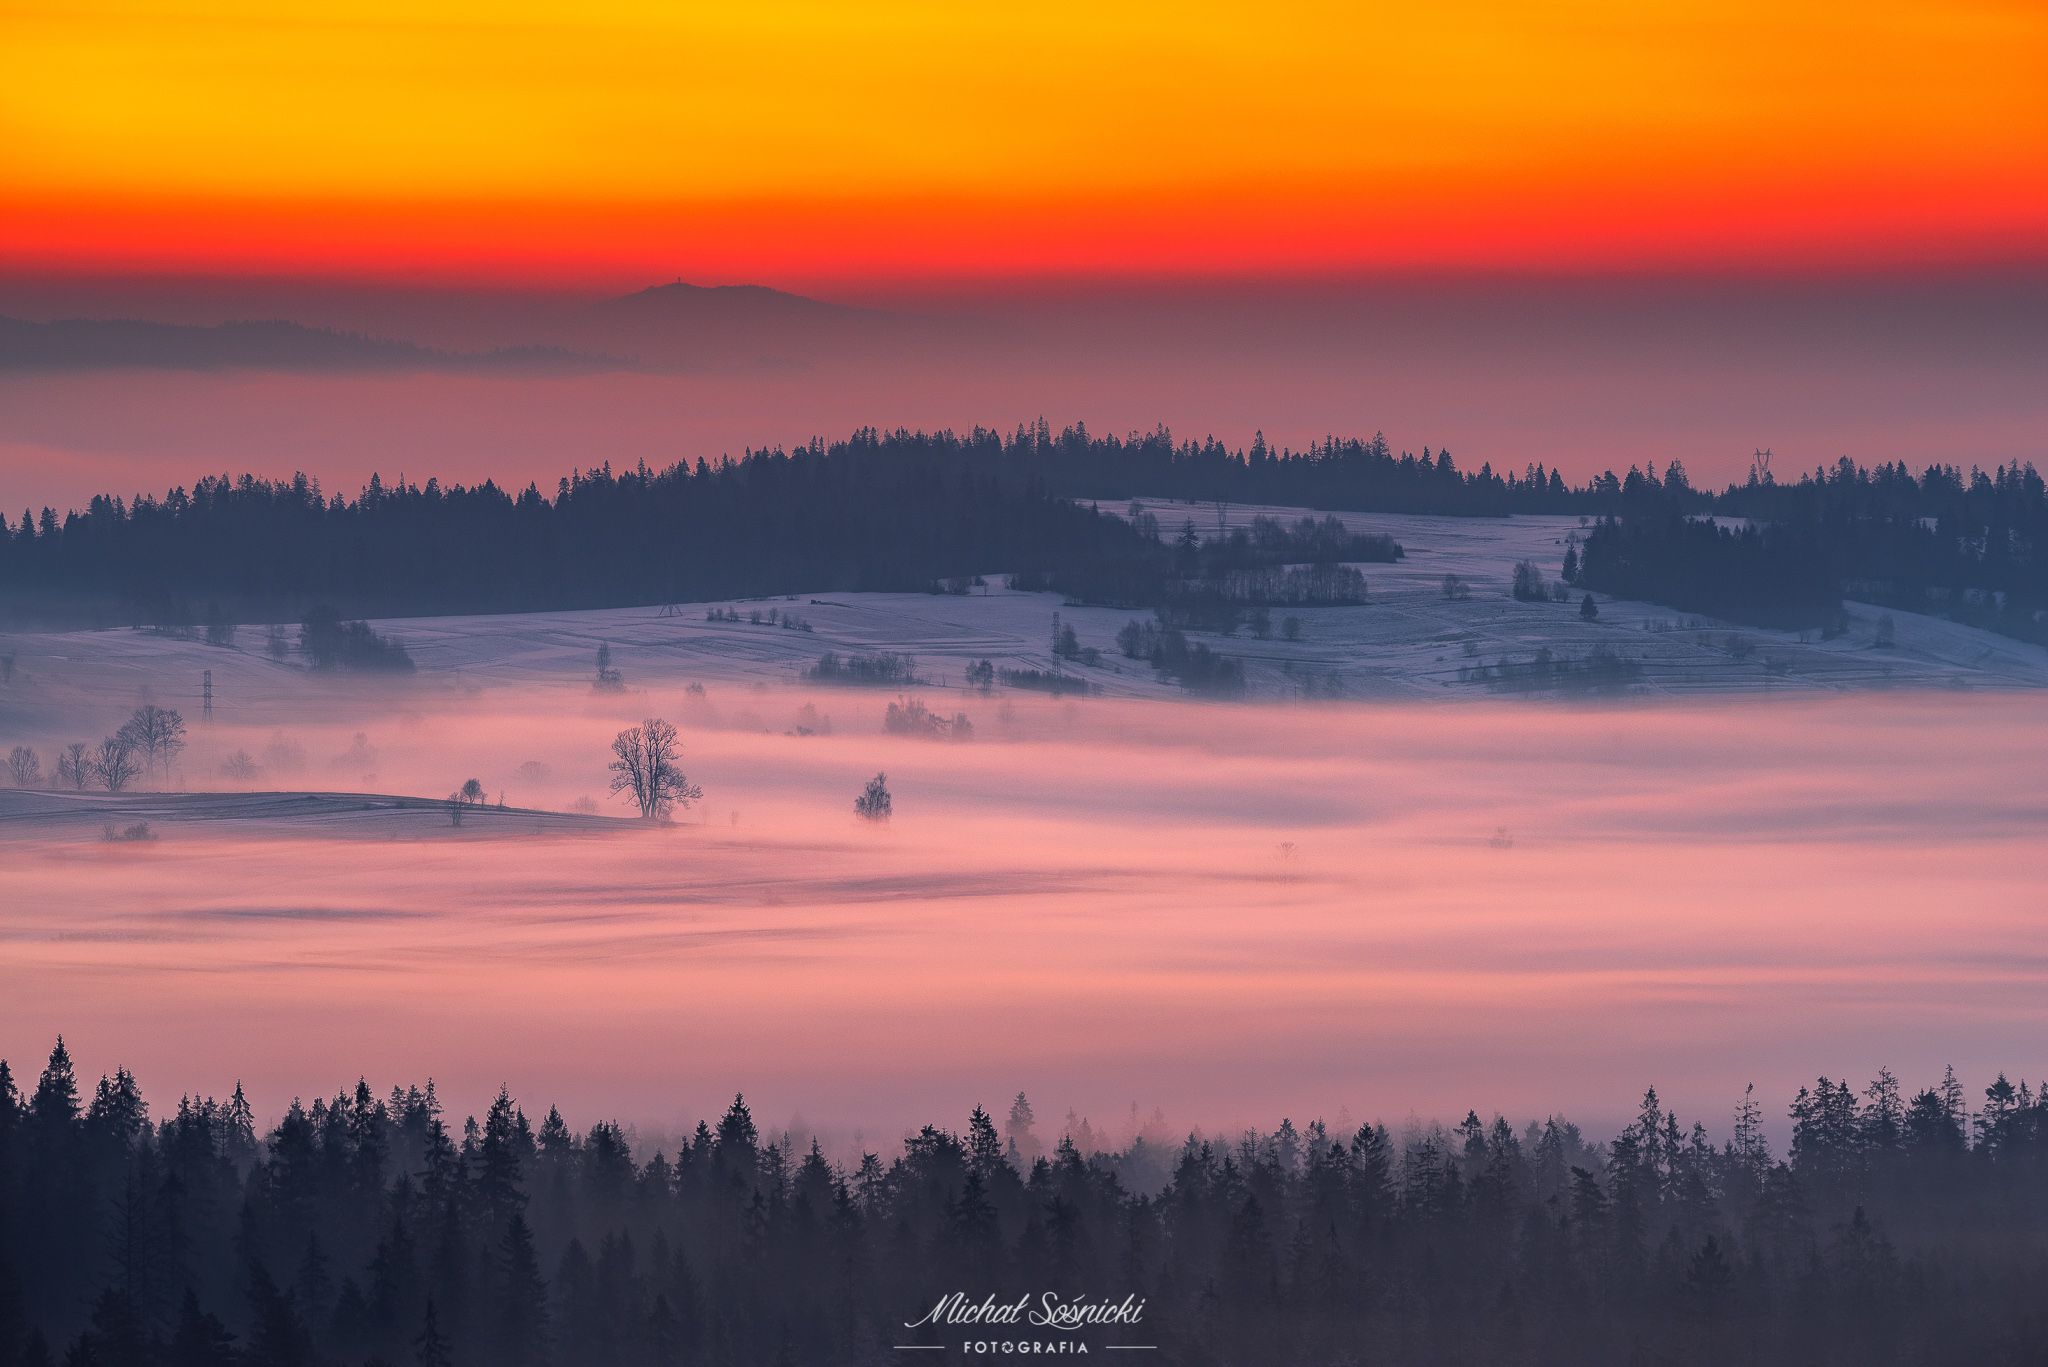 #poland #pentax #benro #lightroom #nikcollection #nature #sunrise #mountains #sky #fog #foggy #morning #pix #trees #sun #forest, Sośnicki Michał